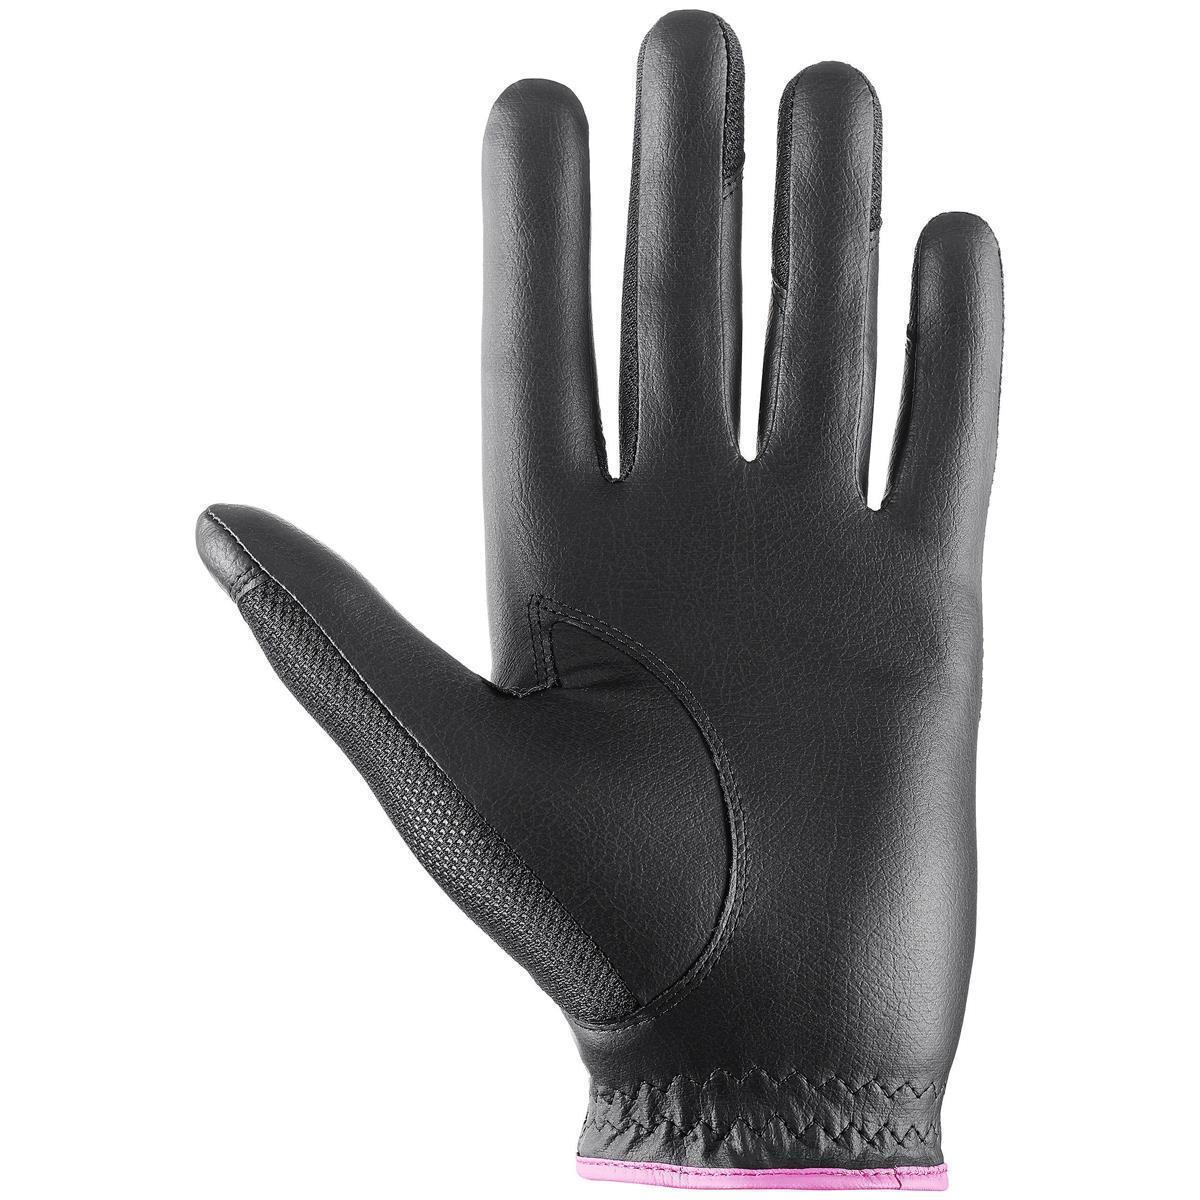 uvex Sumair Riding Gloves pink 8